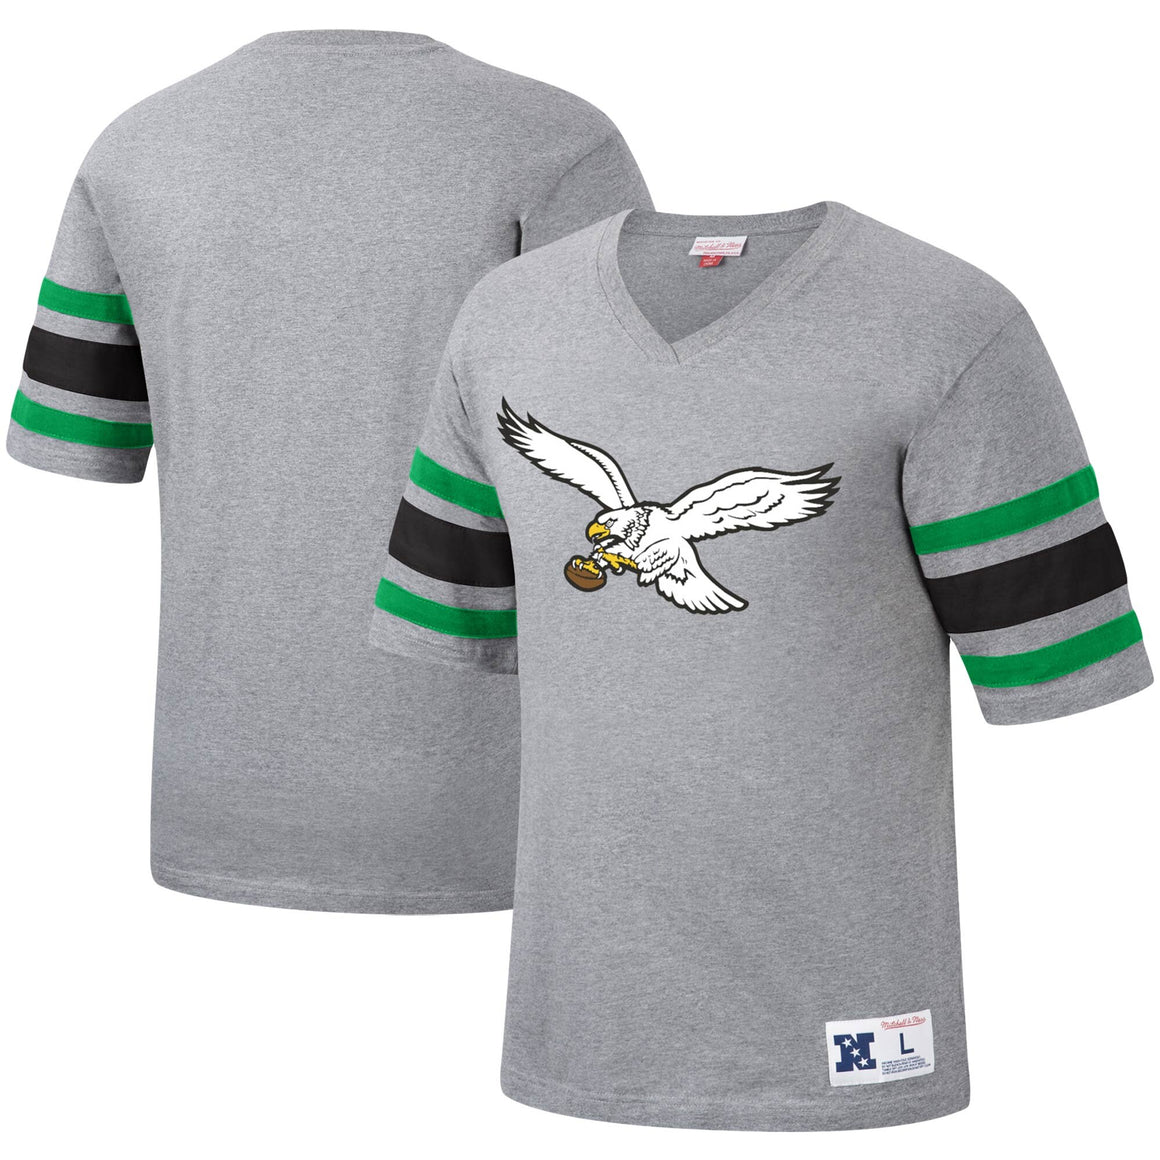 grey philadelphia eagles jersey